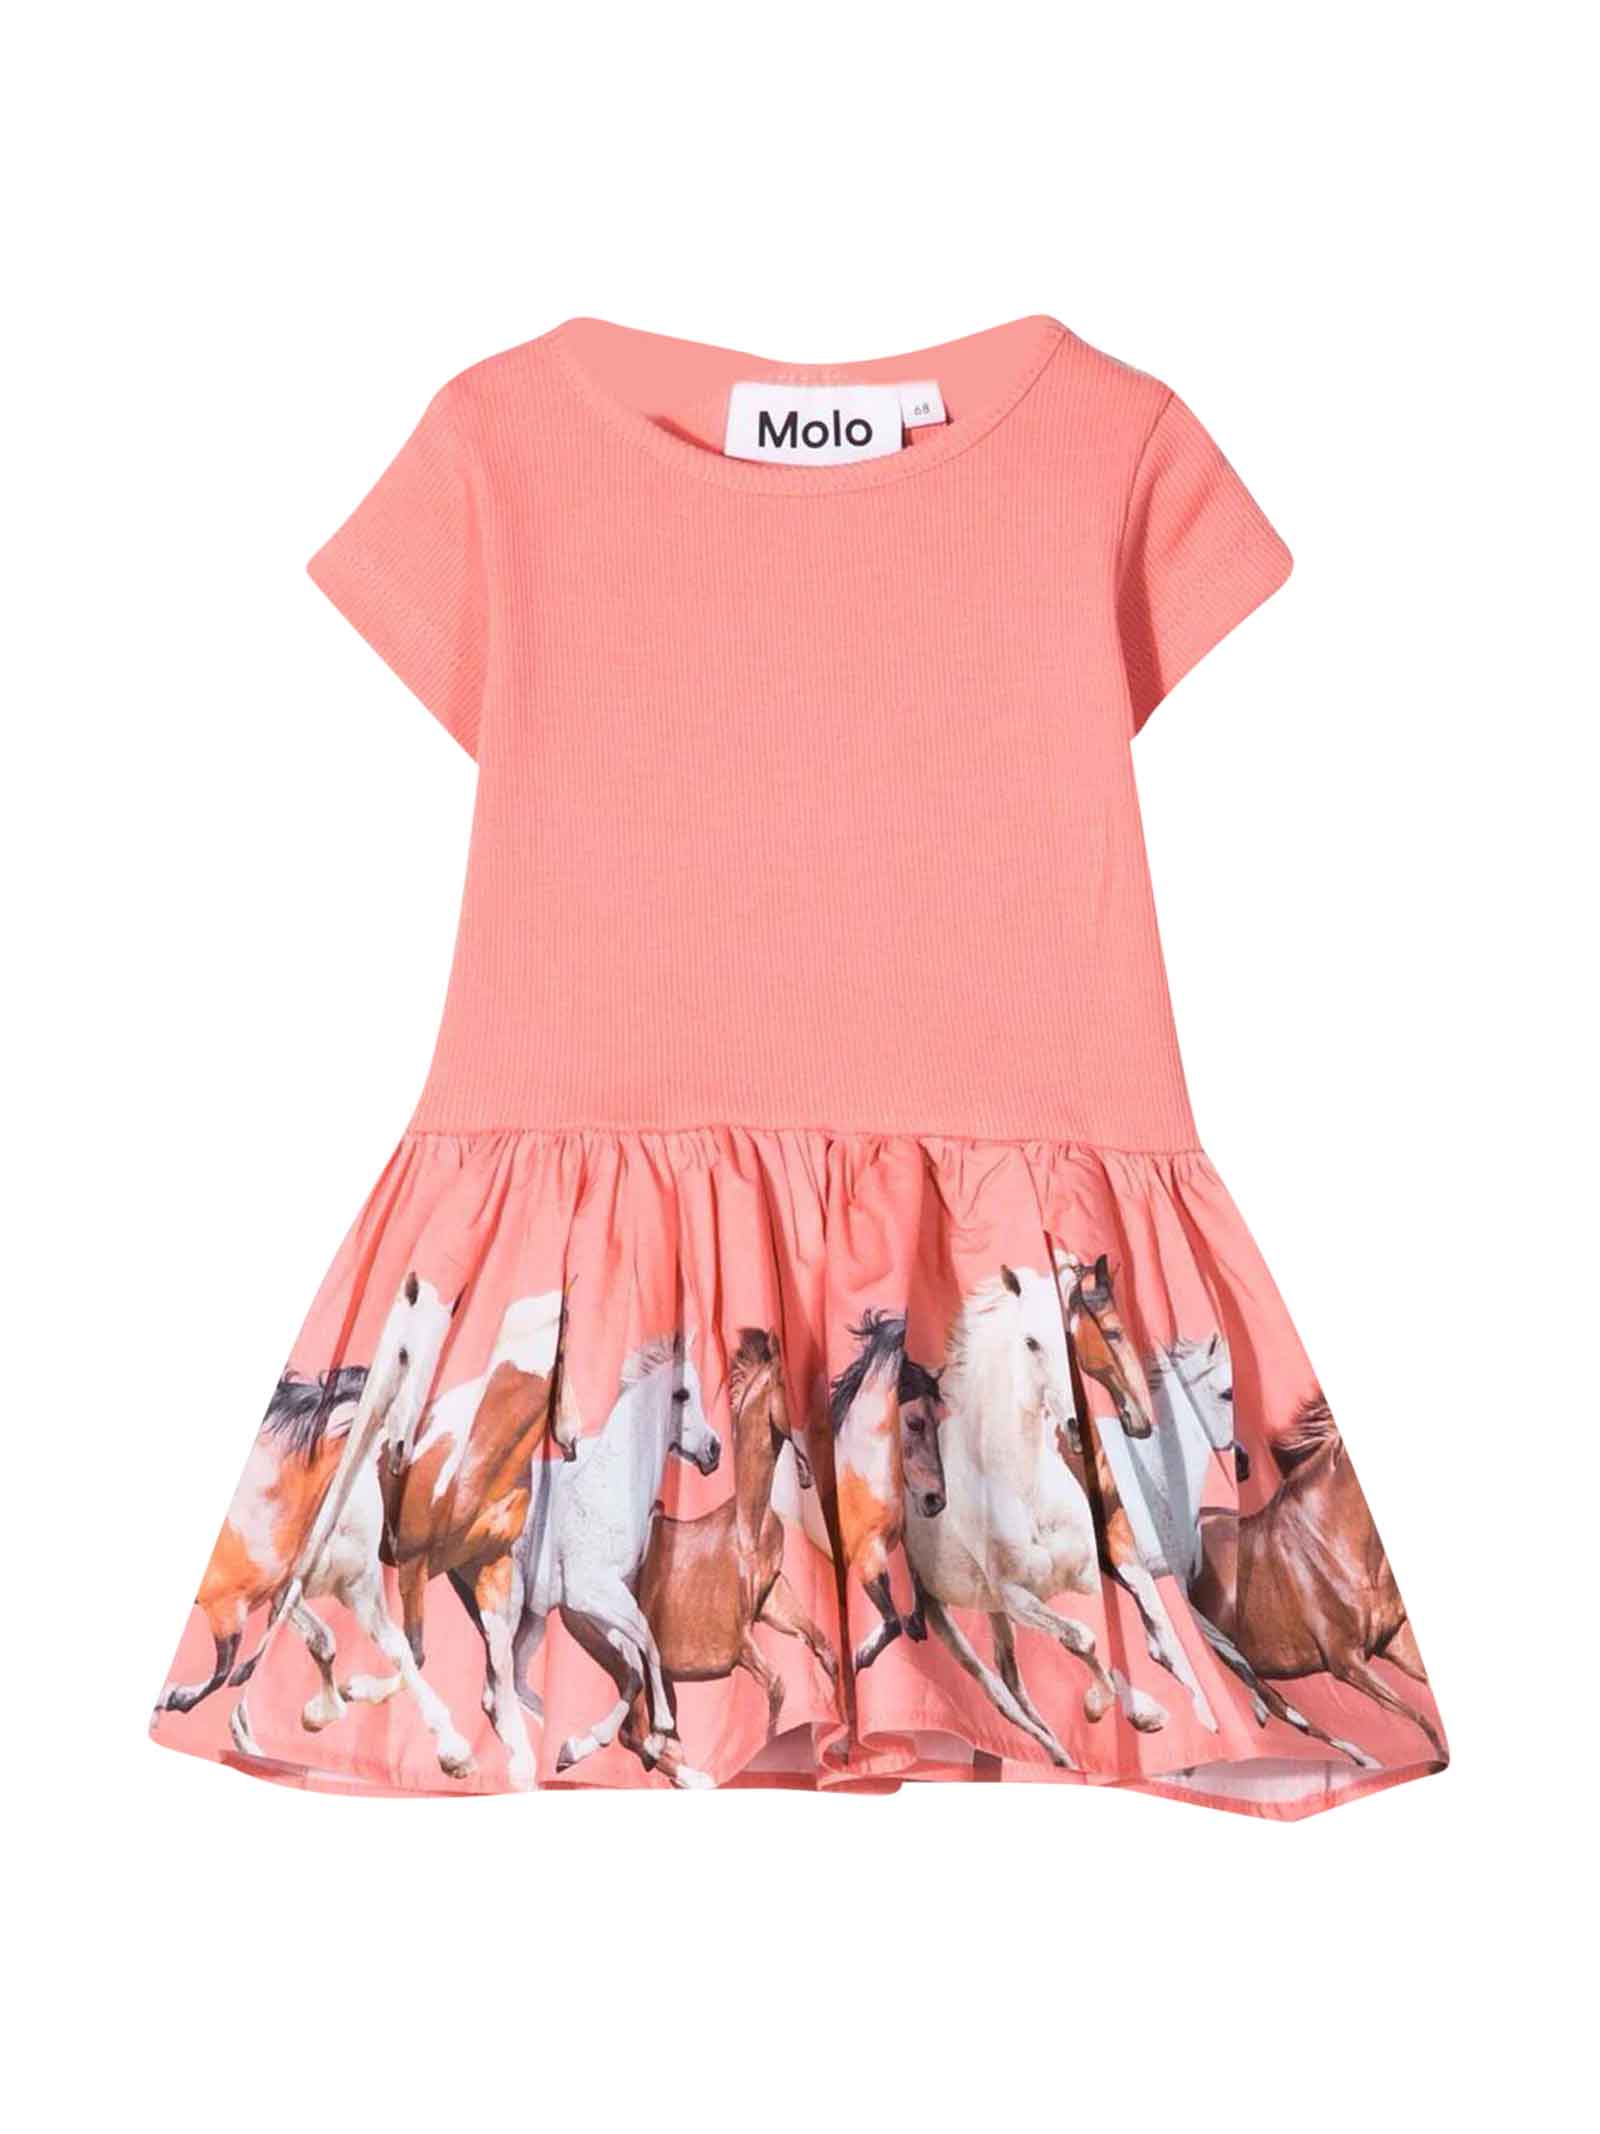 Molo Pink Dress Baby Girl Kids